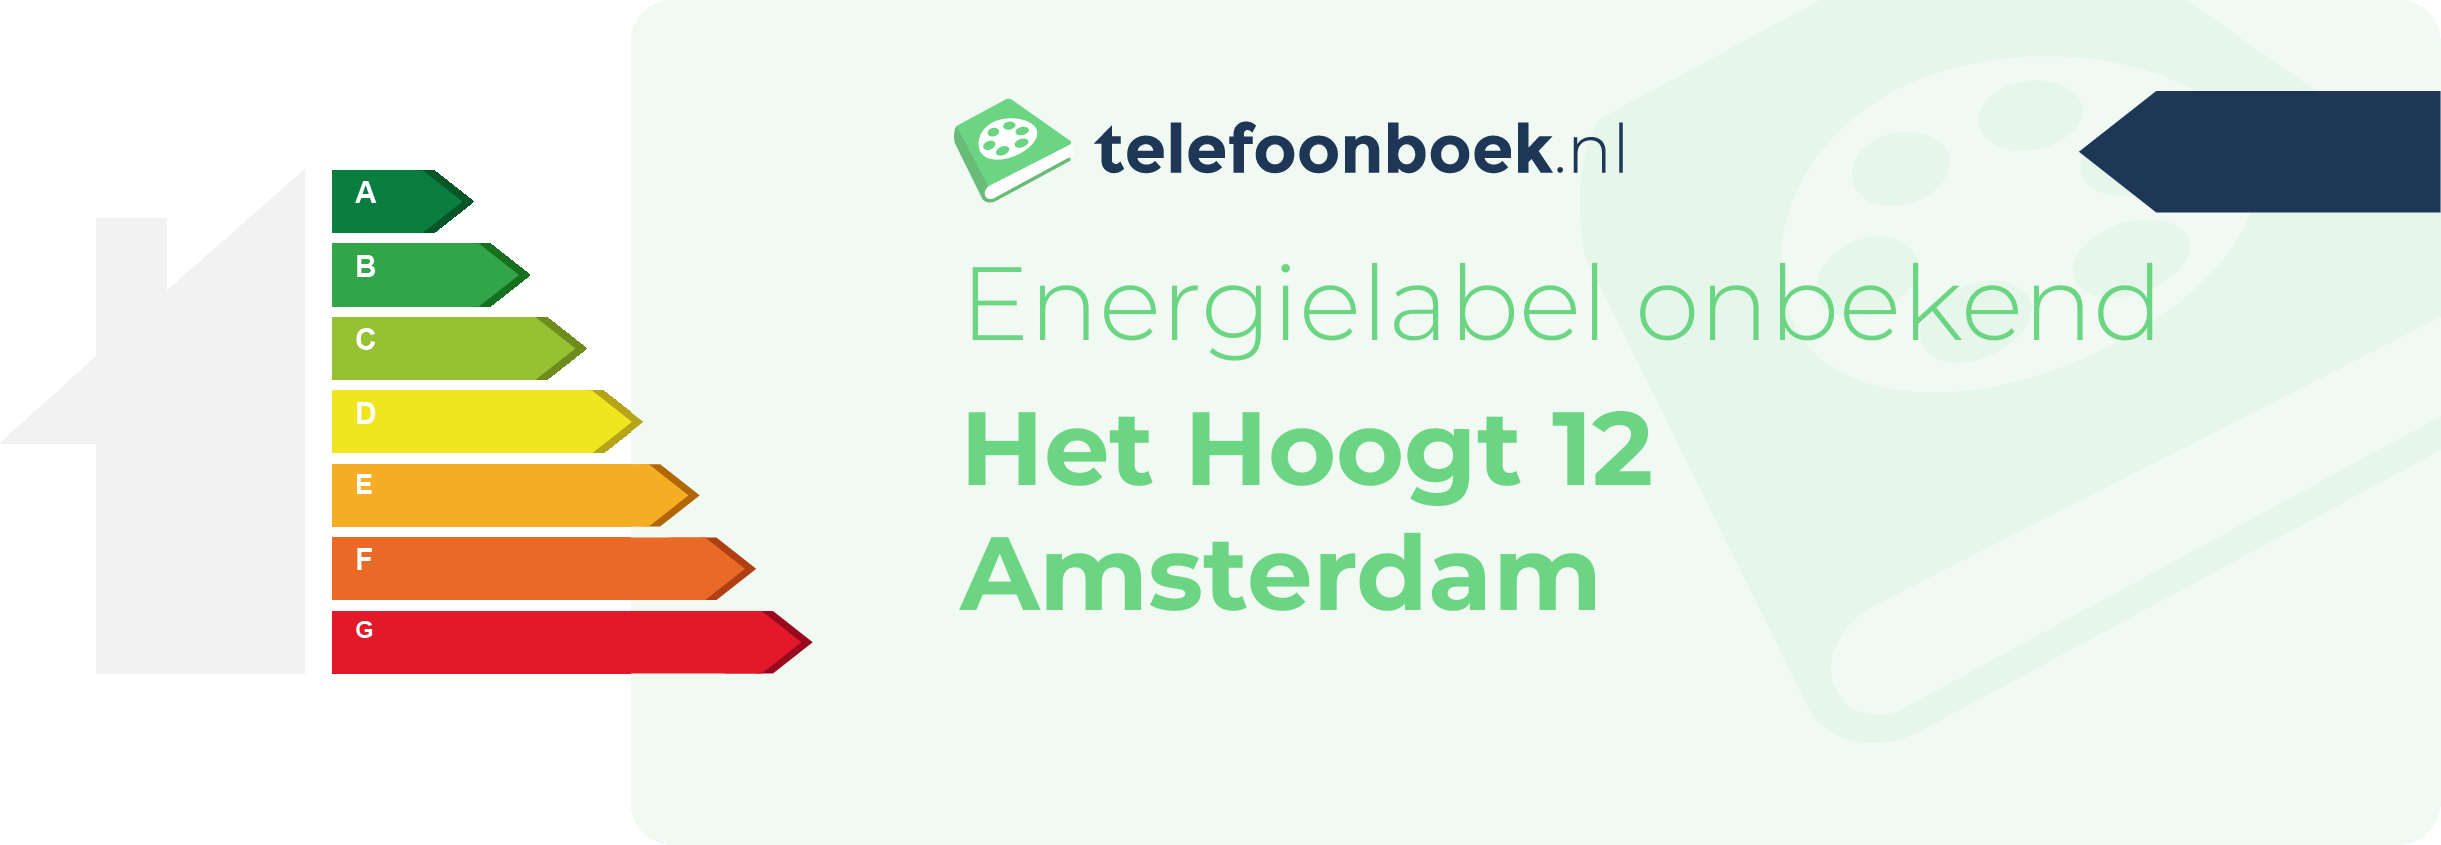 Energielabel Het Hoogt 12 Amsterdam